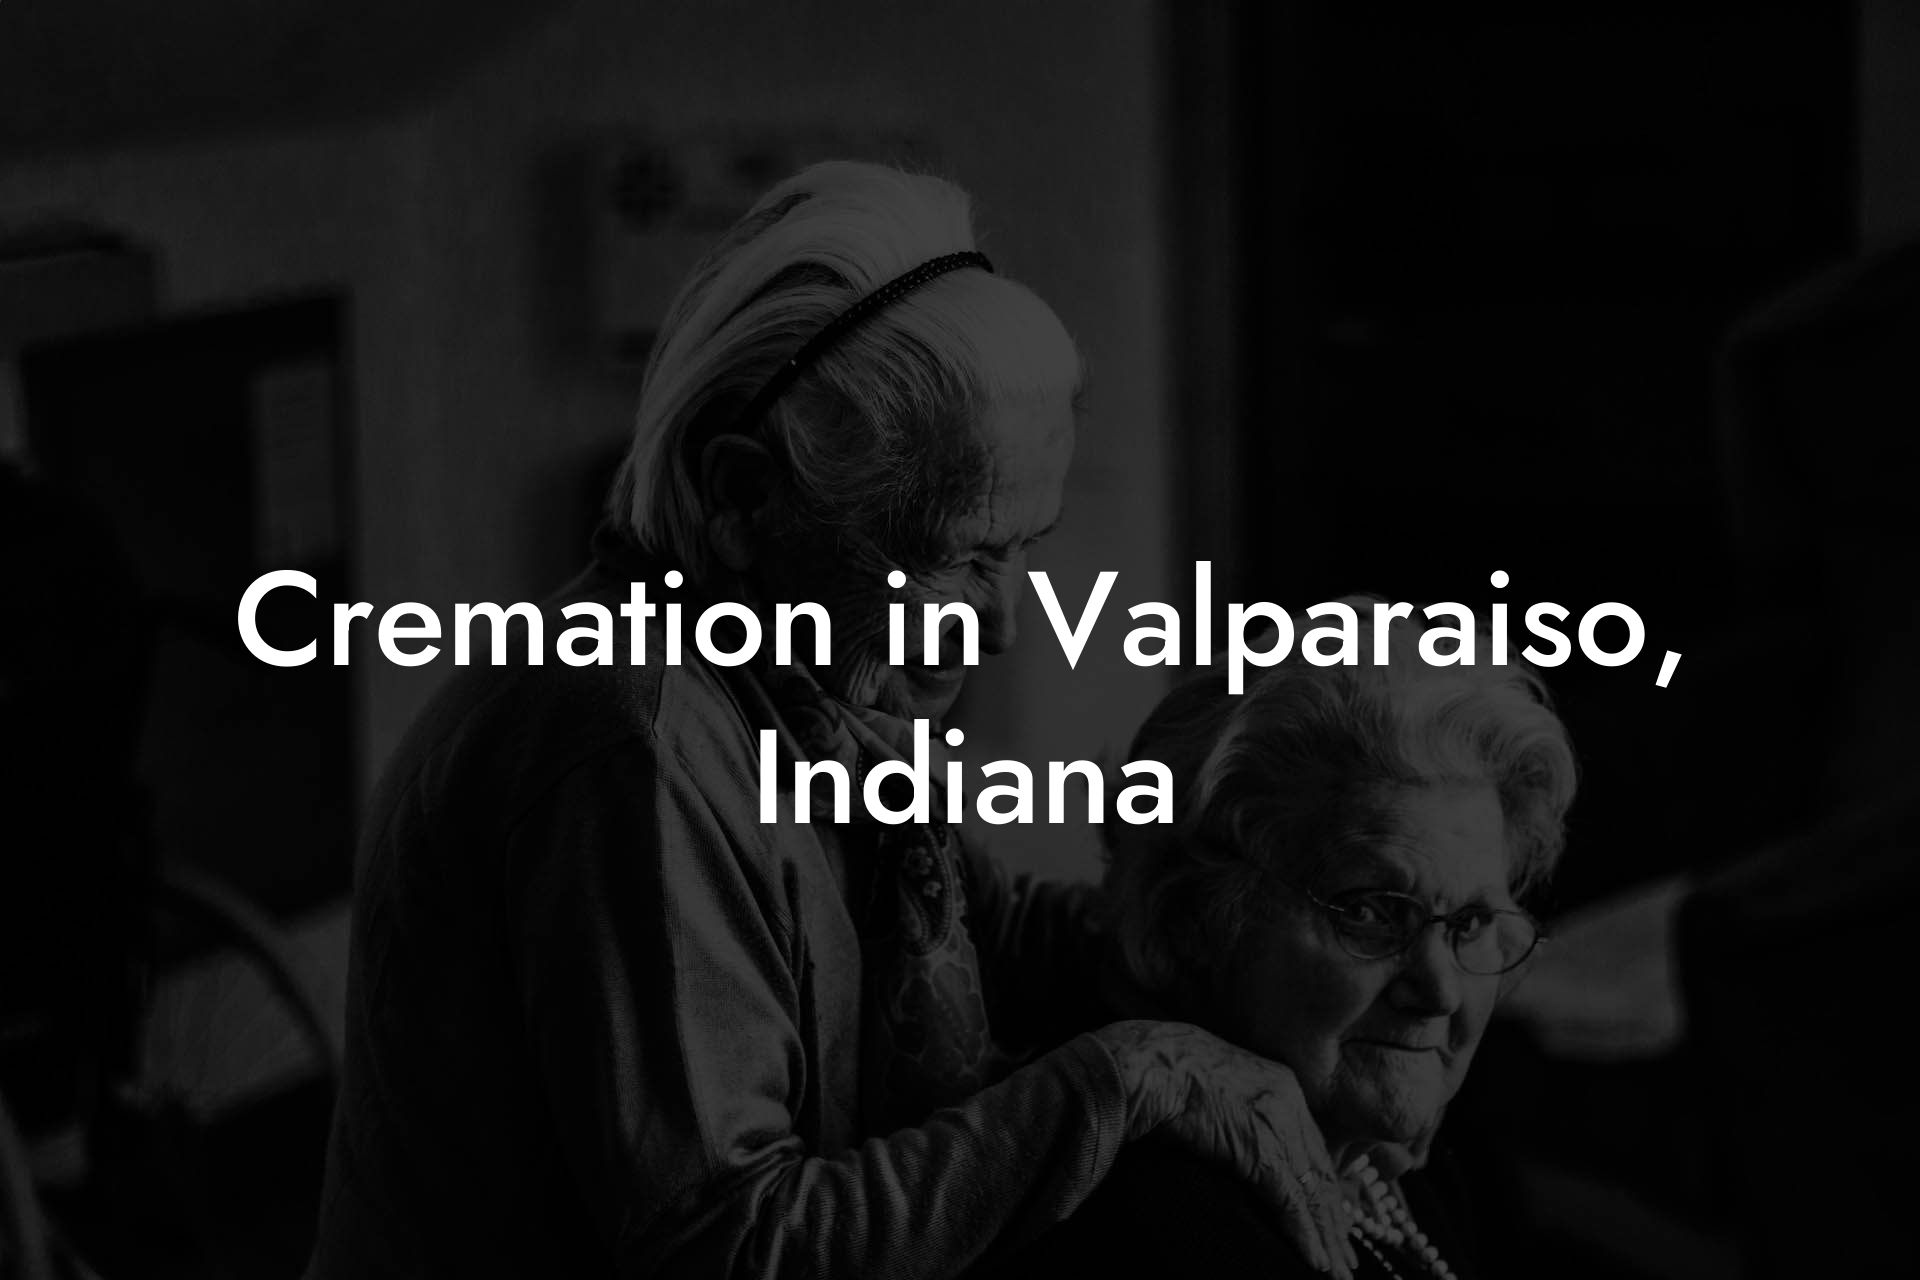 Cremation in Valparaiso, Indiana